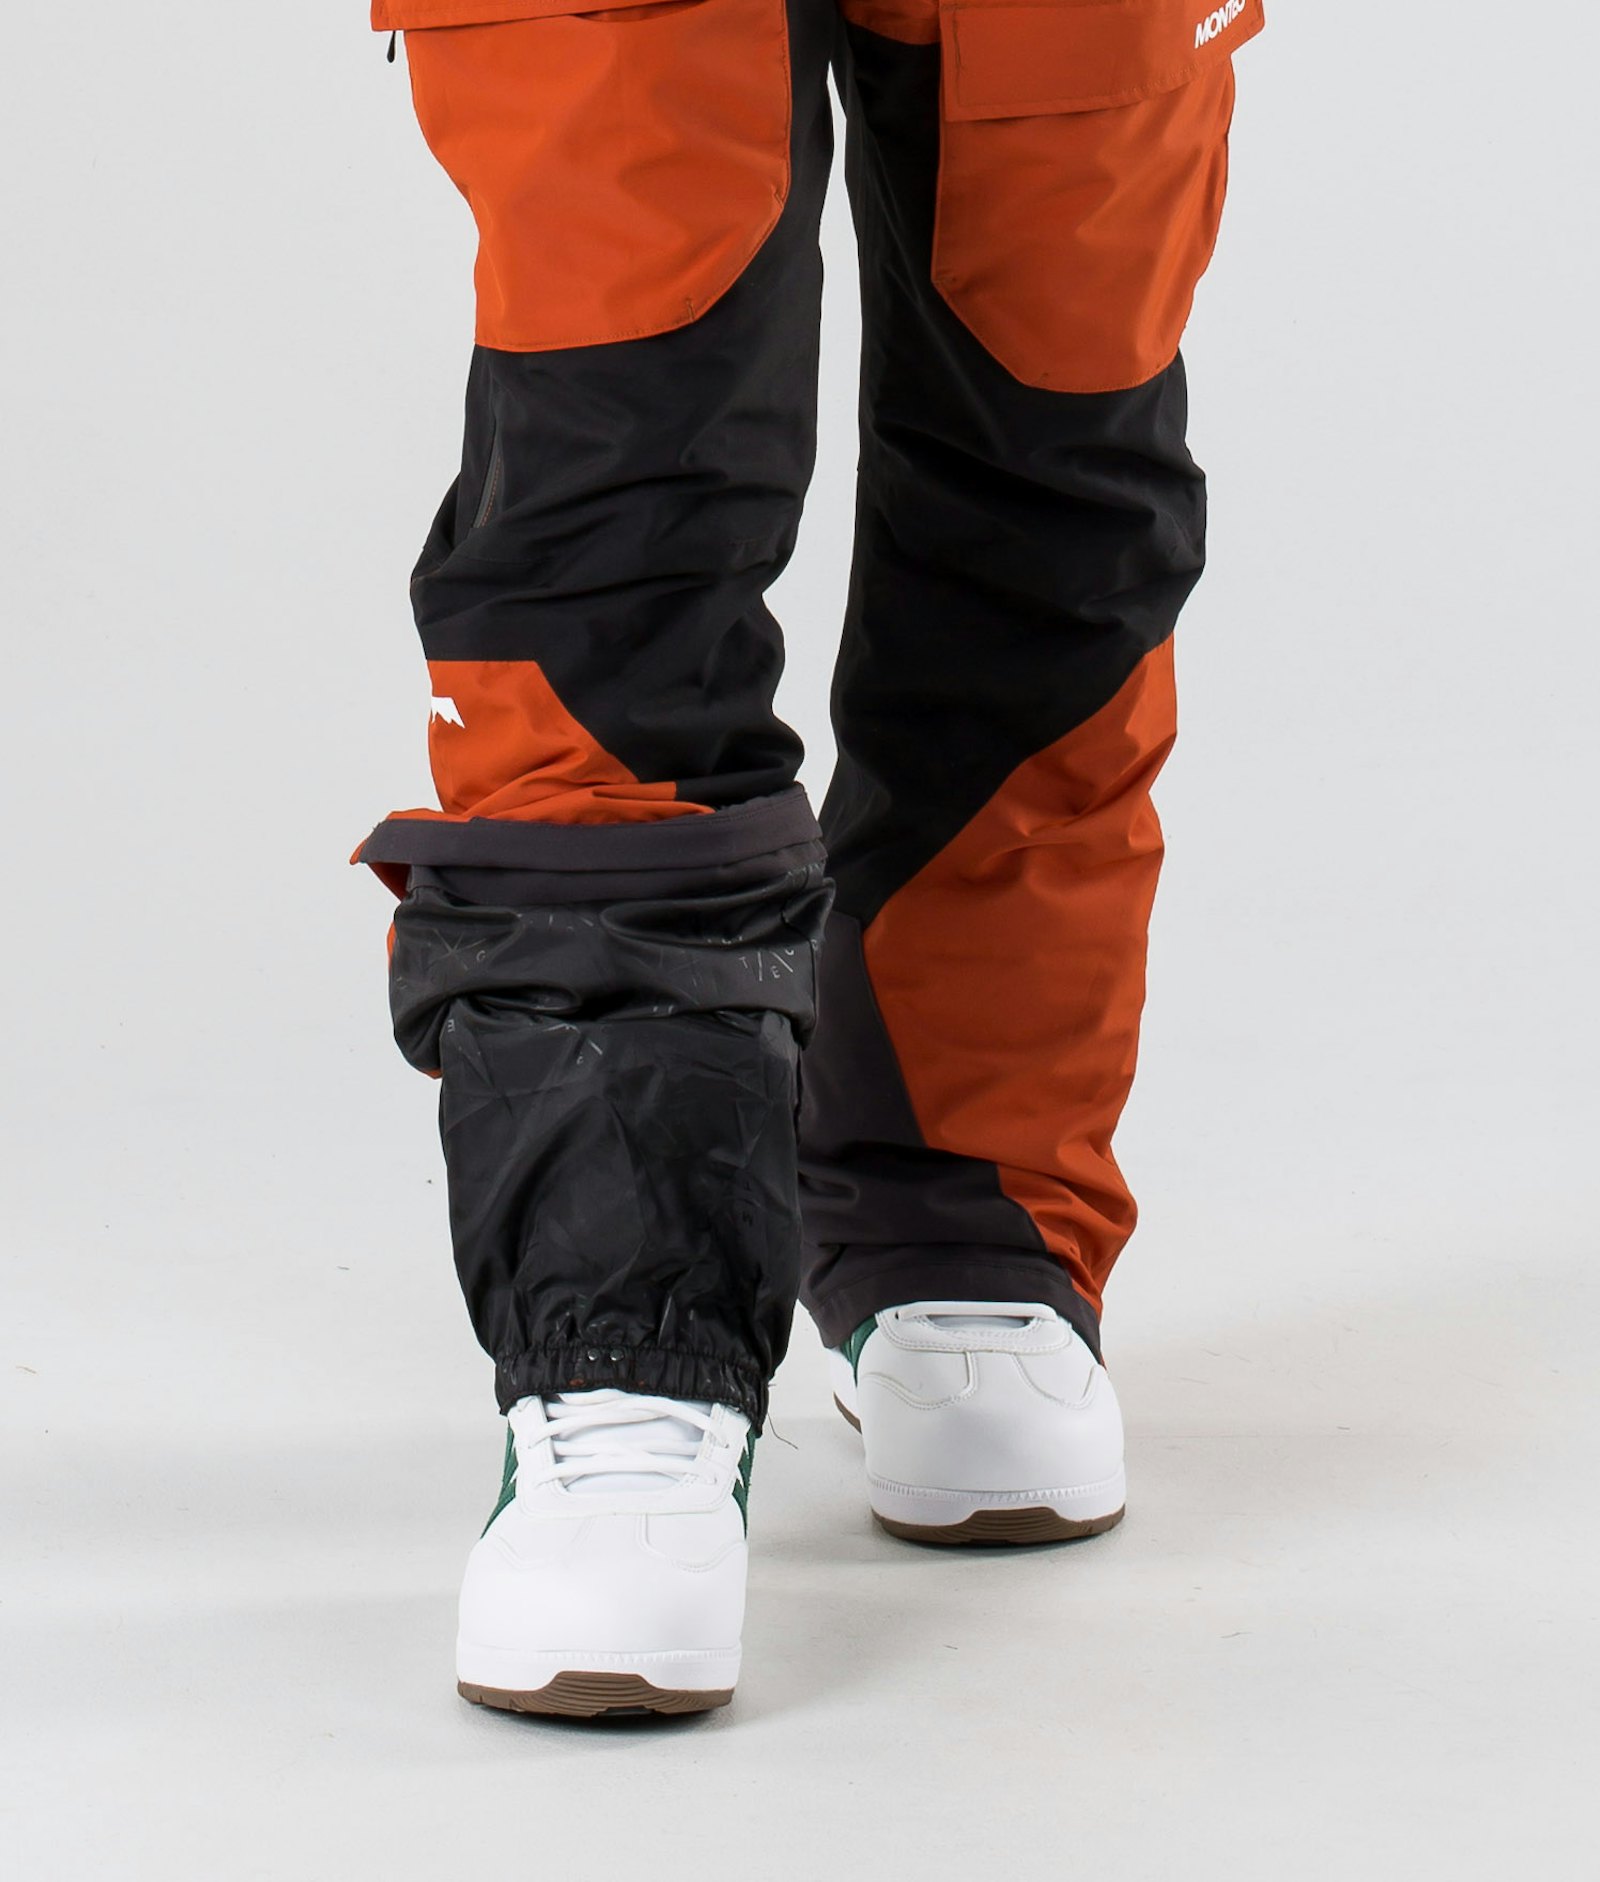 Fawk 2019 Pantalon de Snowboard Homme Clay/Black